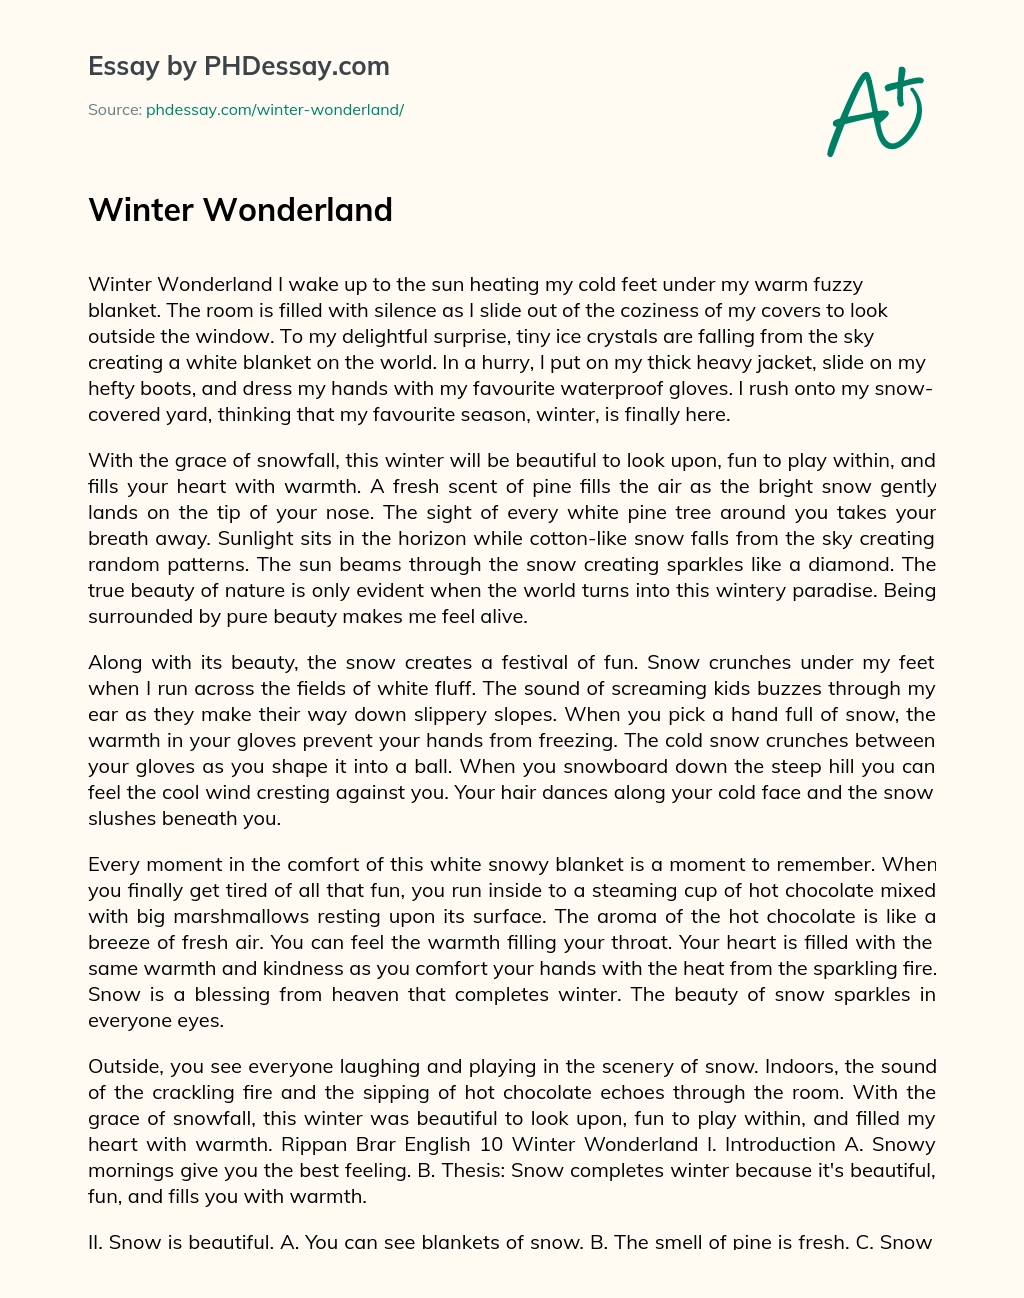 Winter Wonderland essay